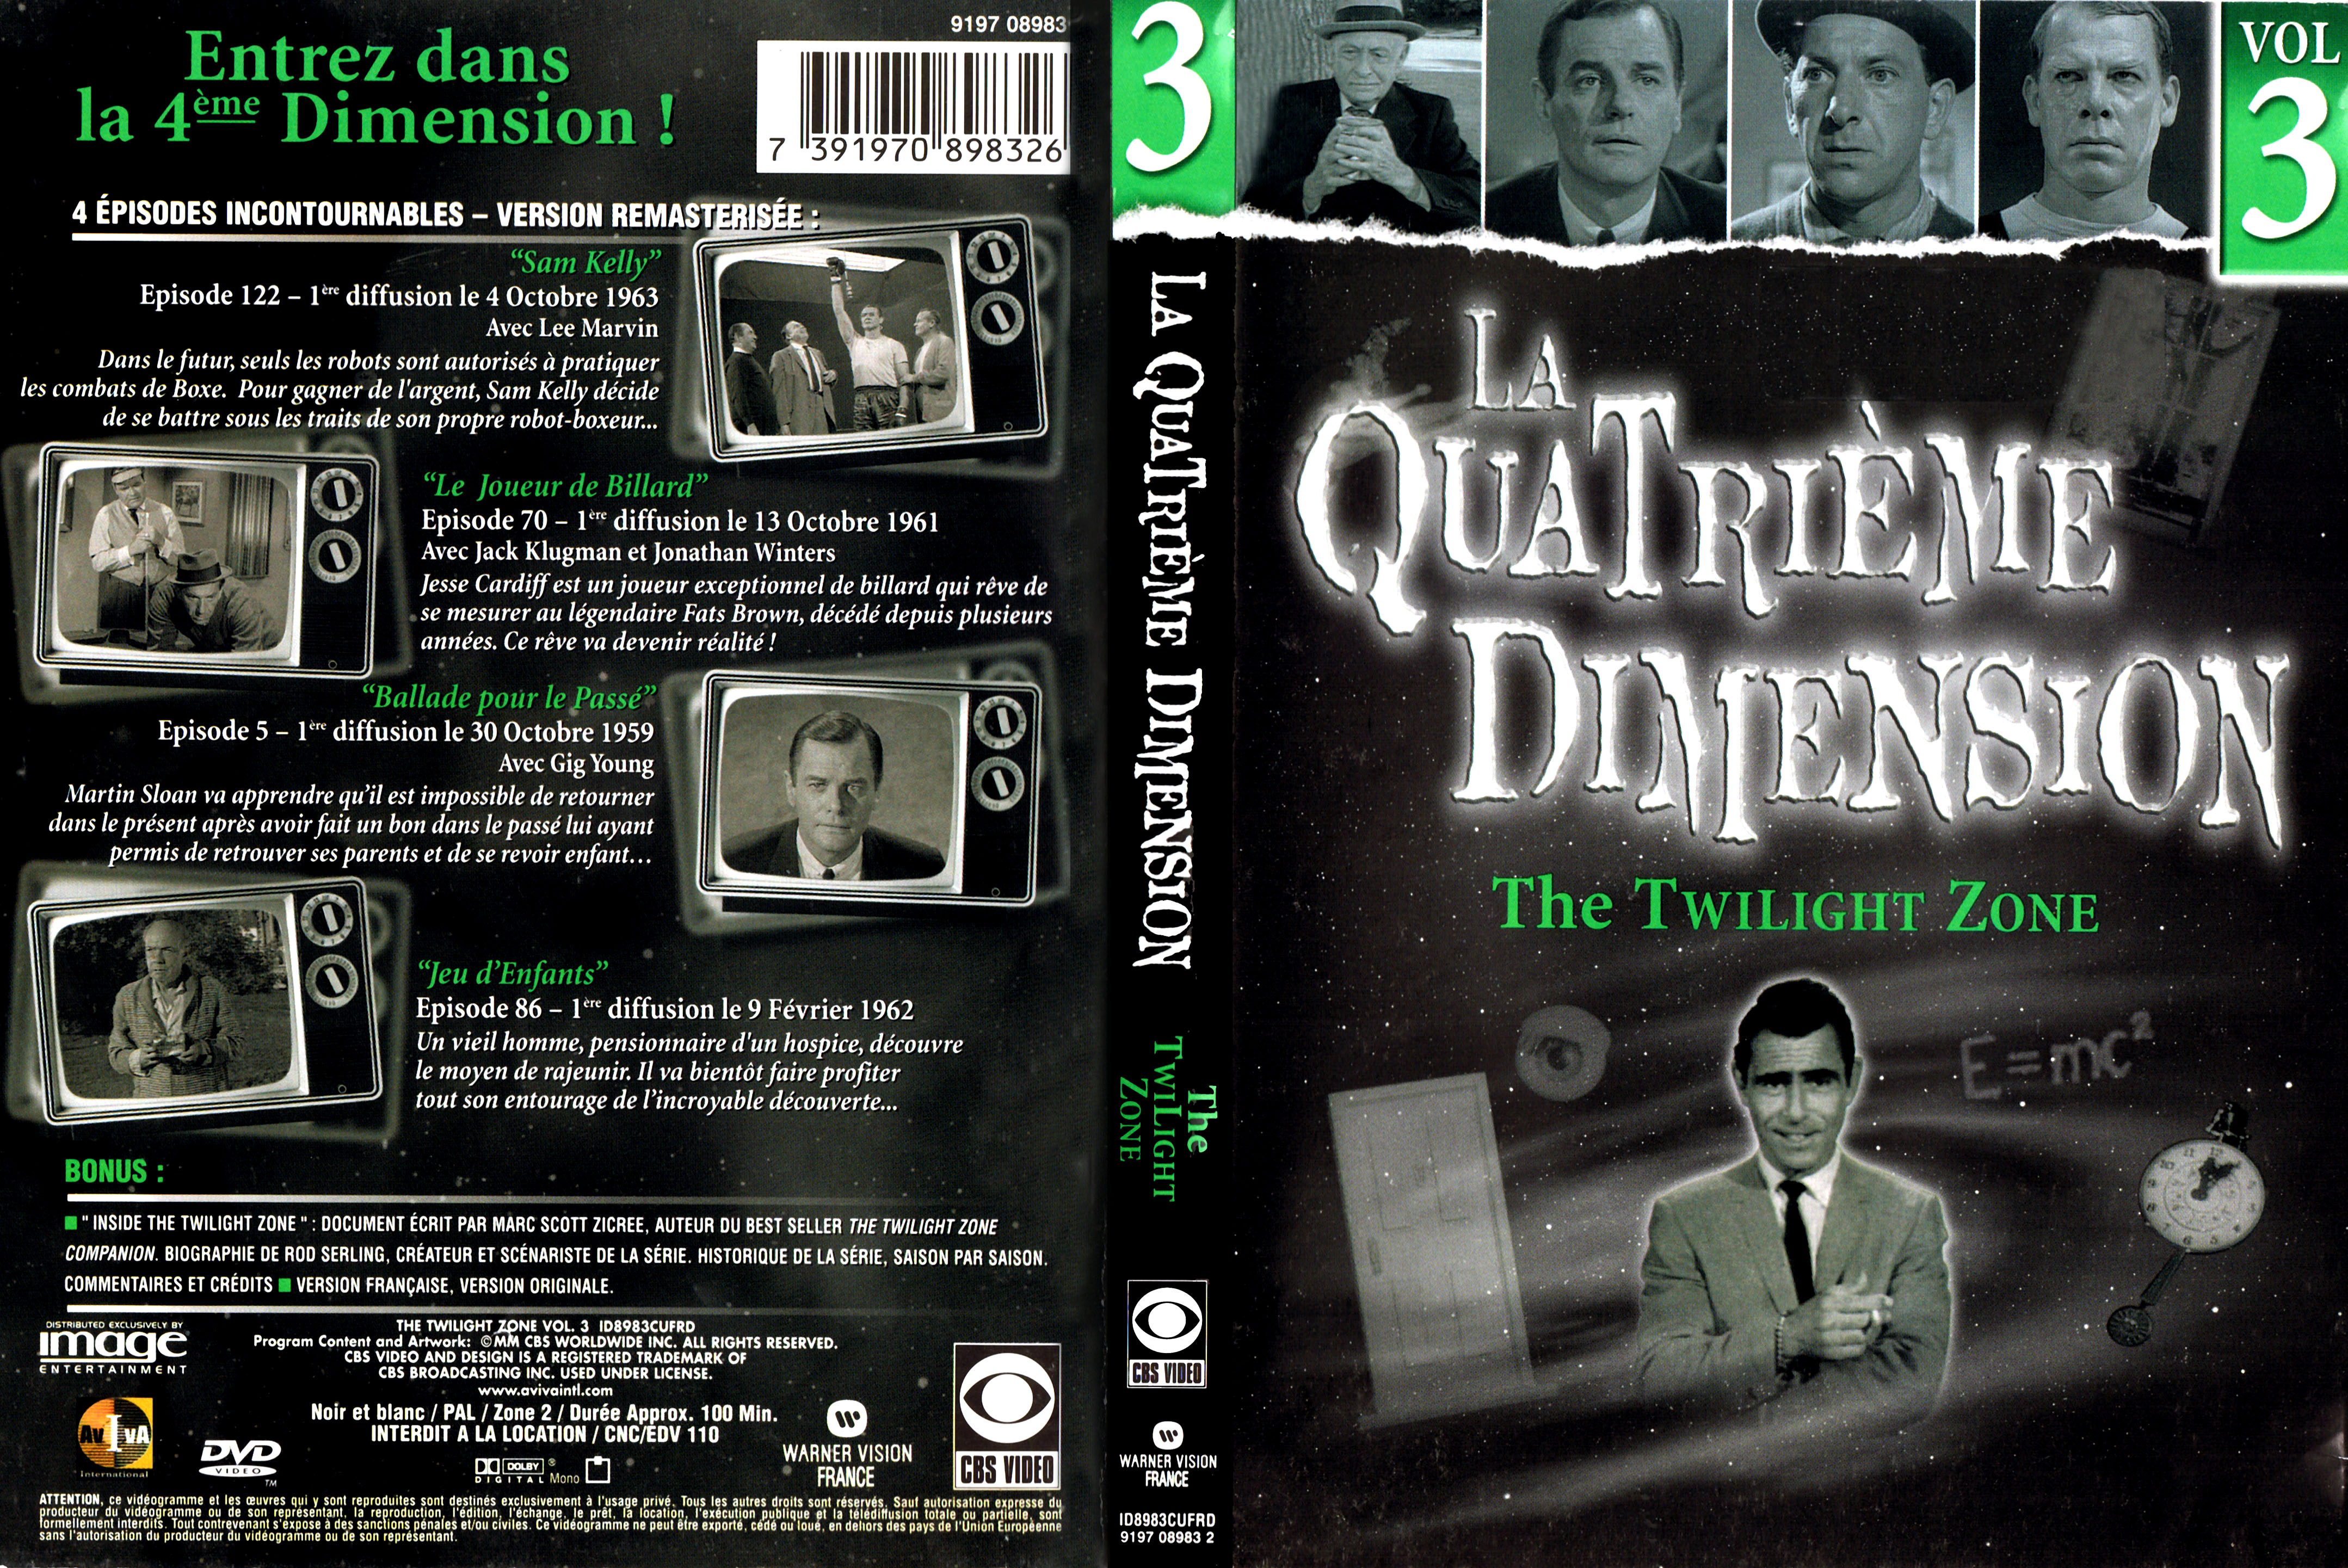 Jaquette DVD La quatrime dimension vol 03